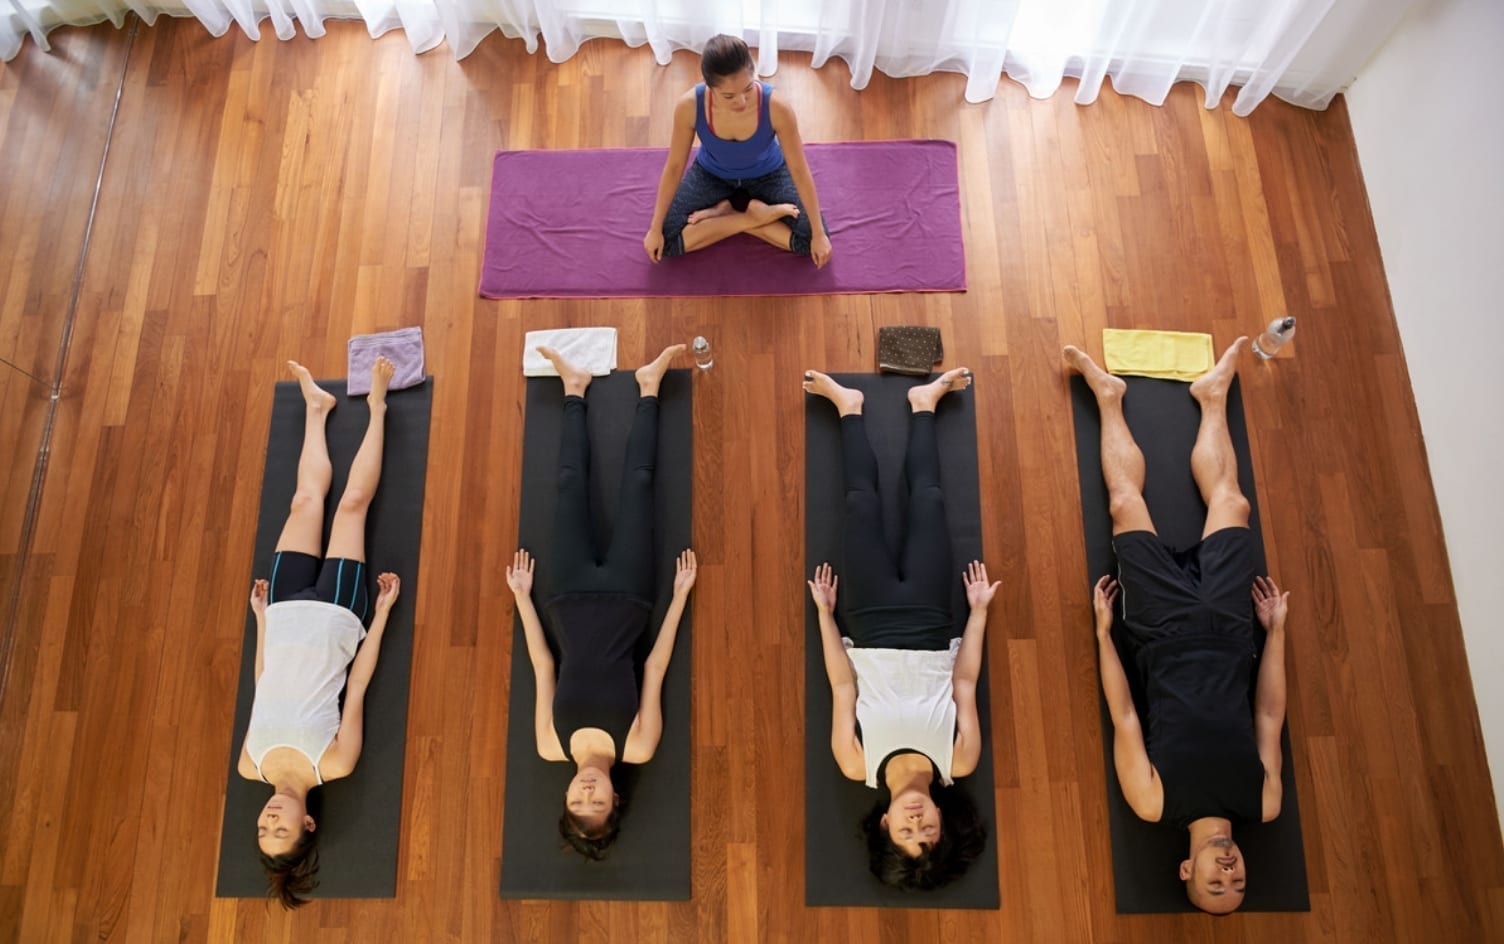 Is Yoga Nidra Your Meditation Secret Weapon?, Fitness